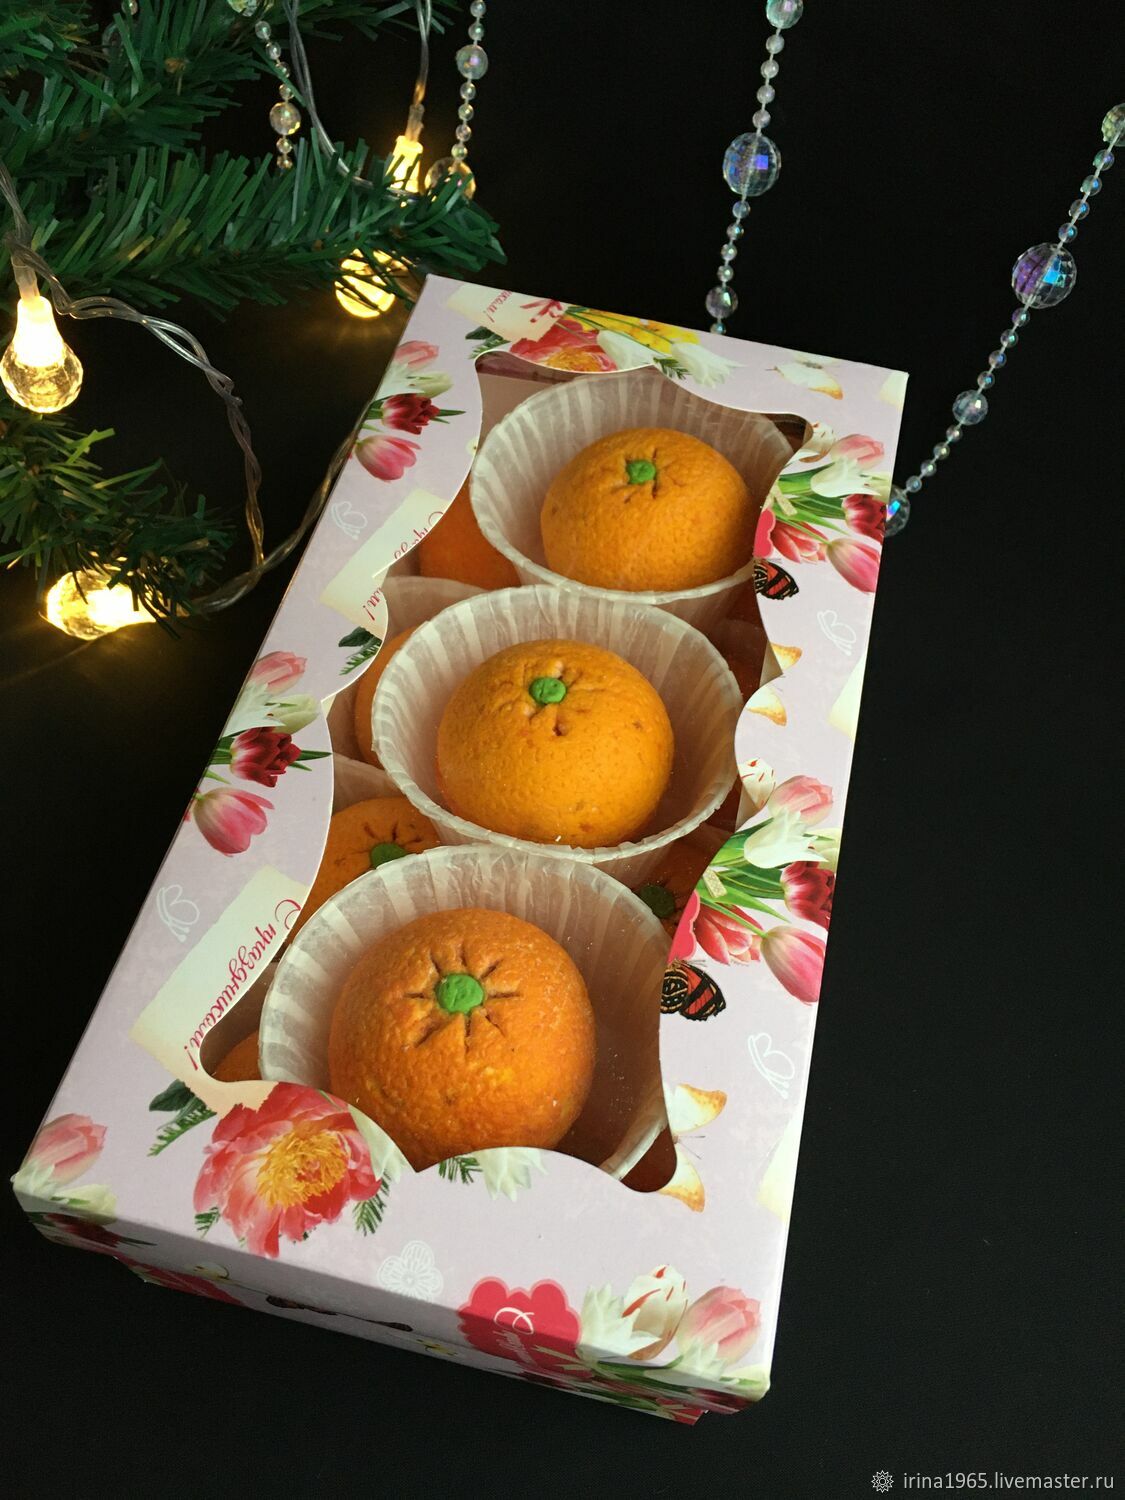 Culinary Souvenirs: Marshmallow Tangerines, Culinary souvenirs, Ulyanovsk,  Фото №1